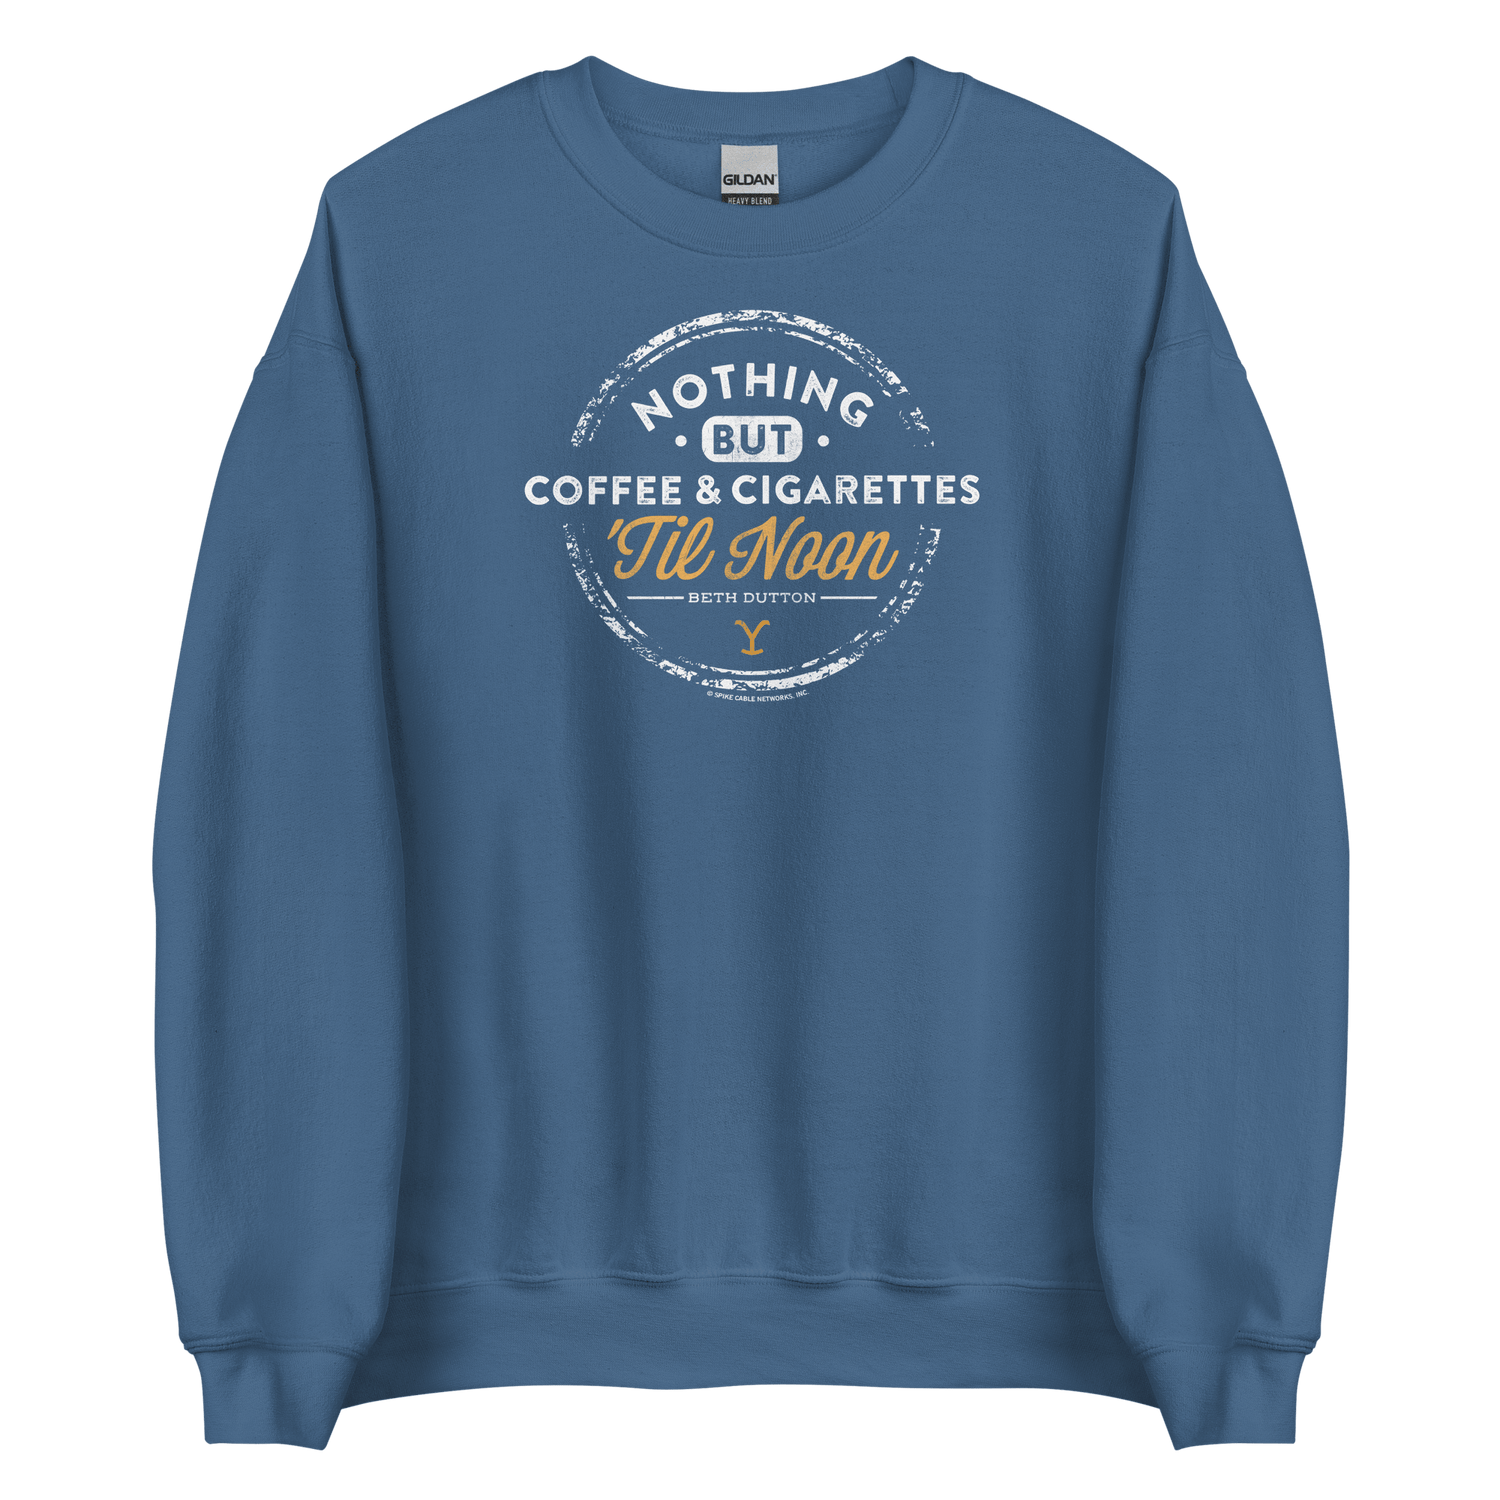 Yellowstone Nothing But Coffee & Cigarettes 'Til Noon Fleece Crewneck Sweatshirt - Paramount Shop